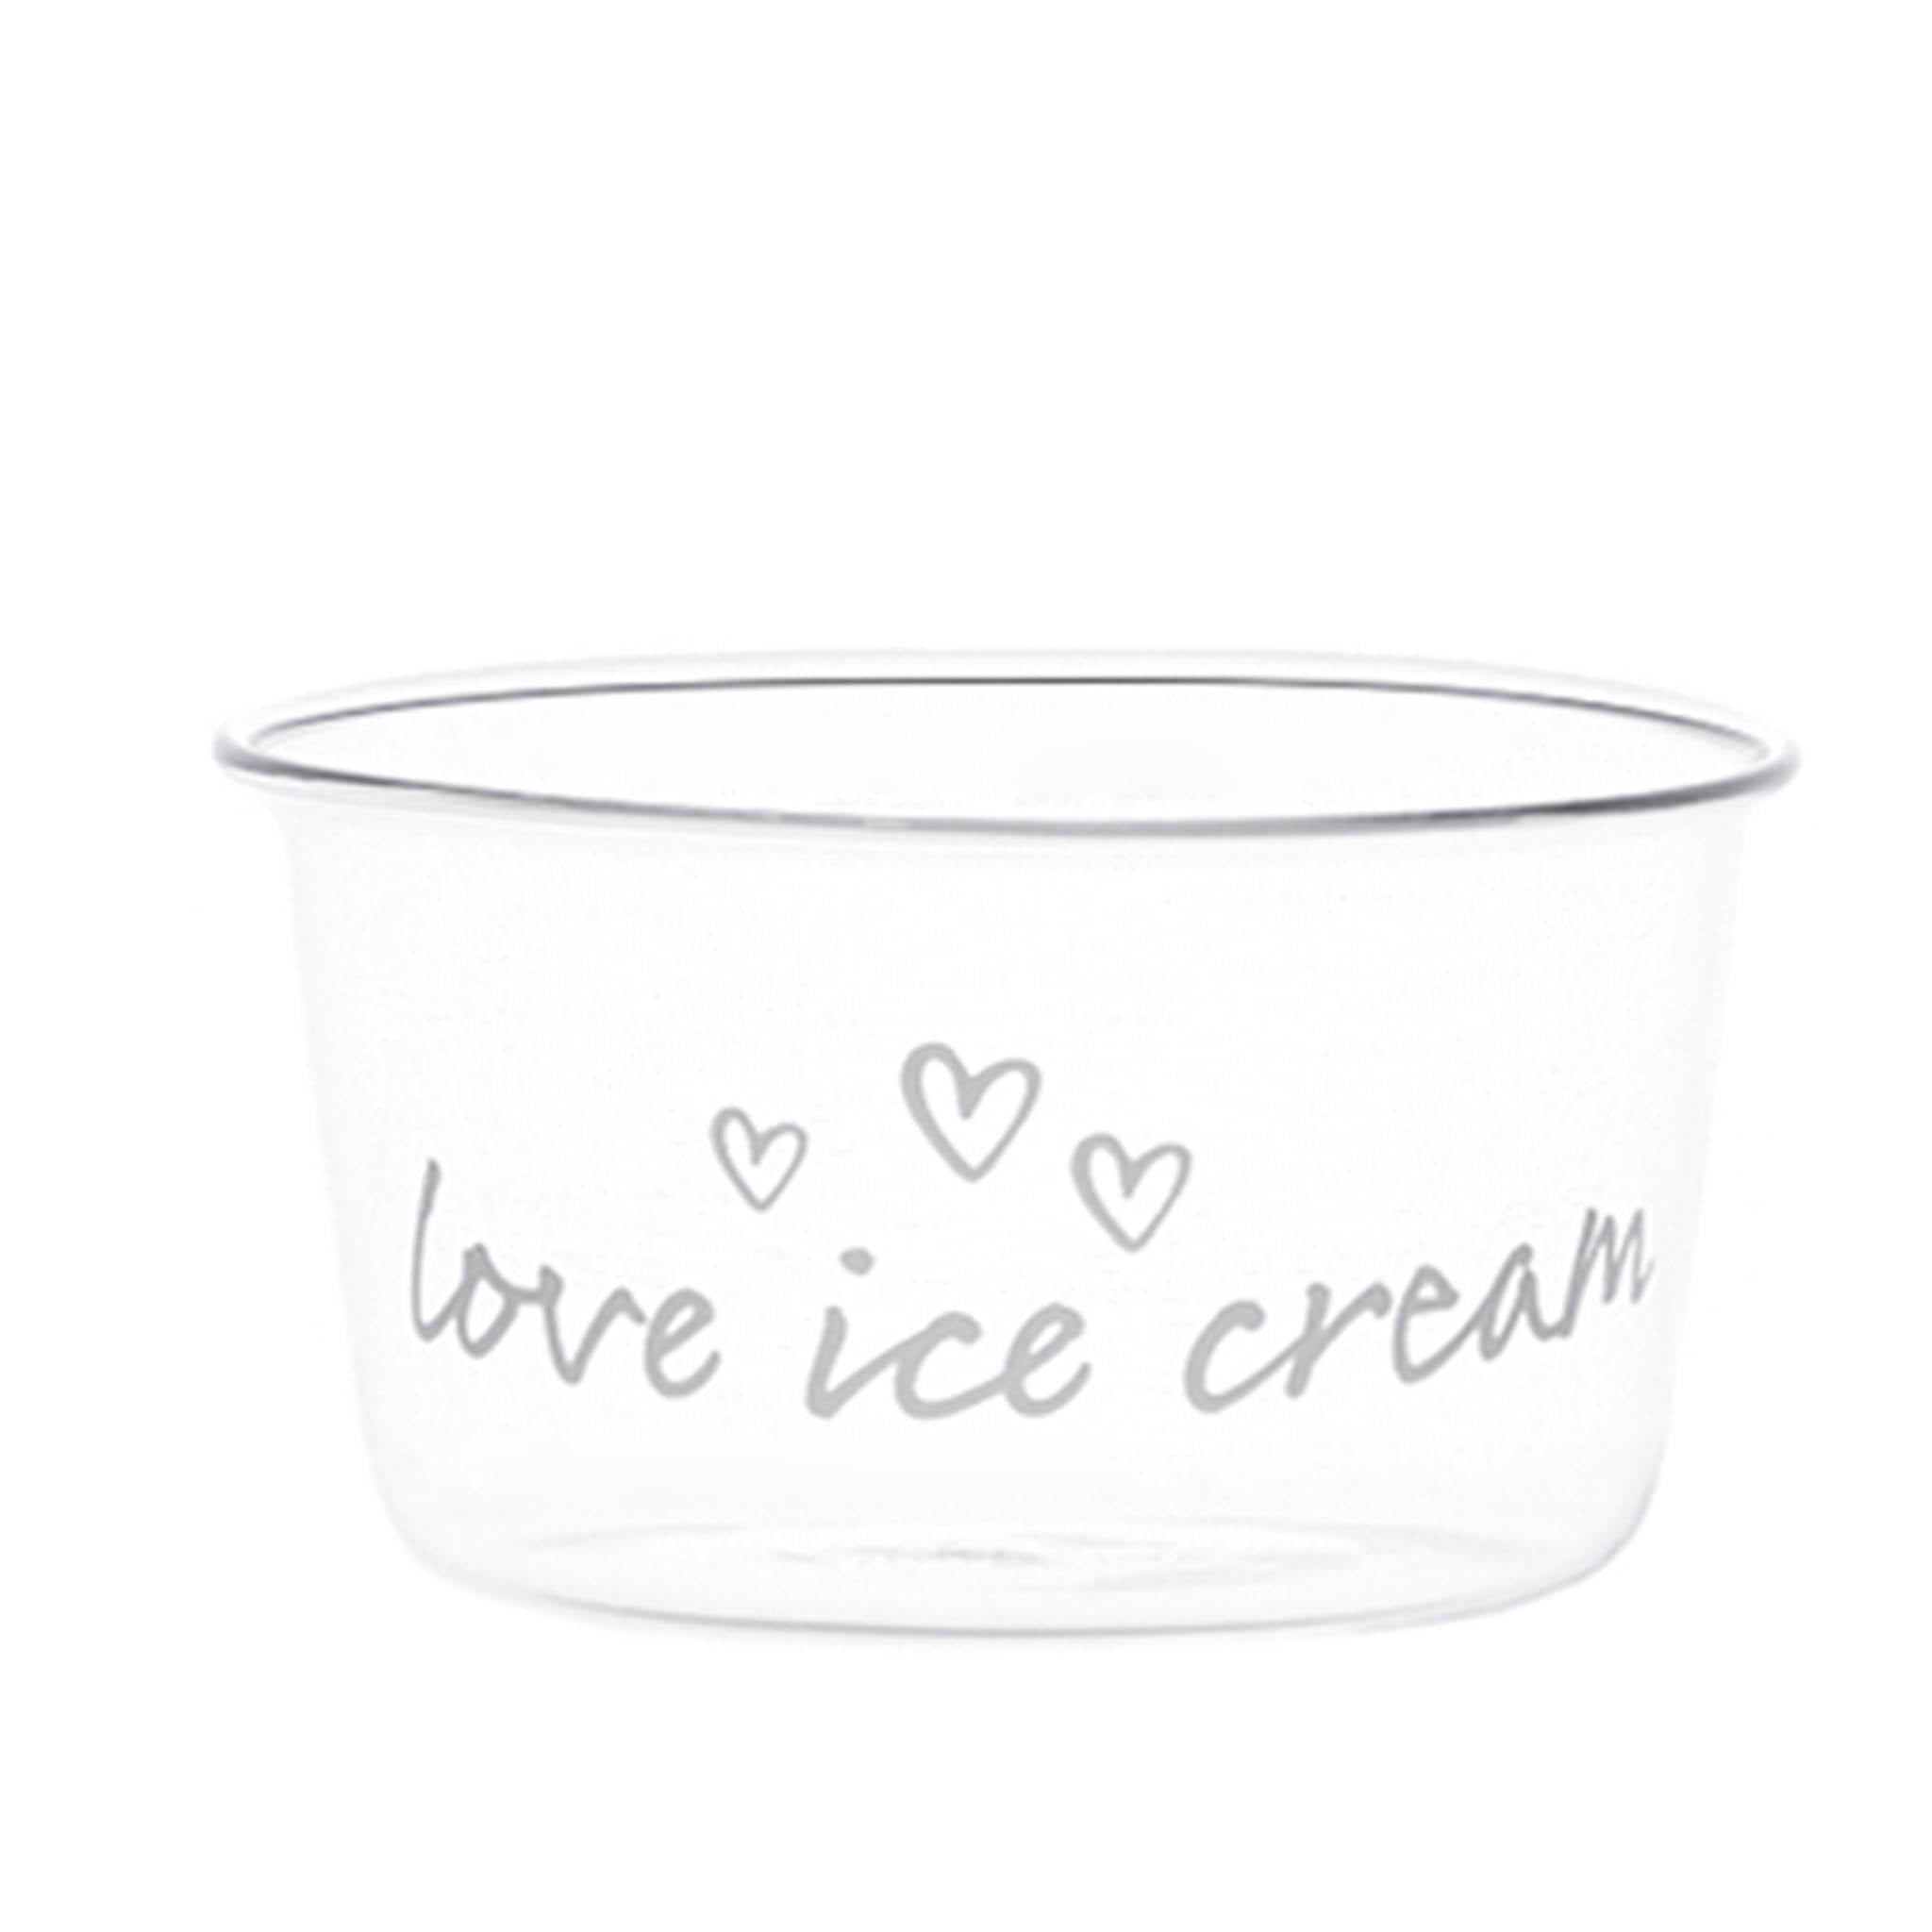 Set 2 Love Hel Cream Ice Cream Cups